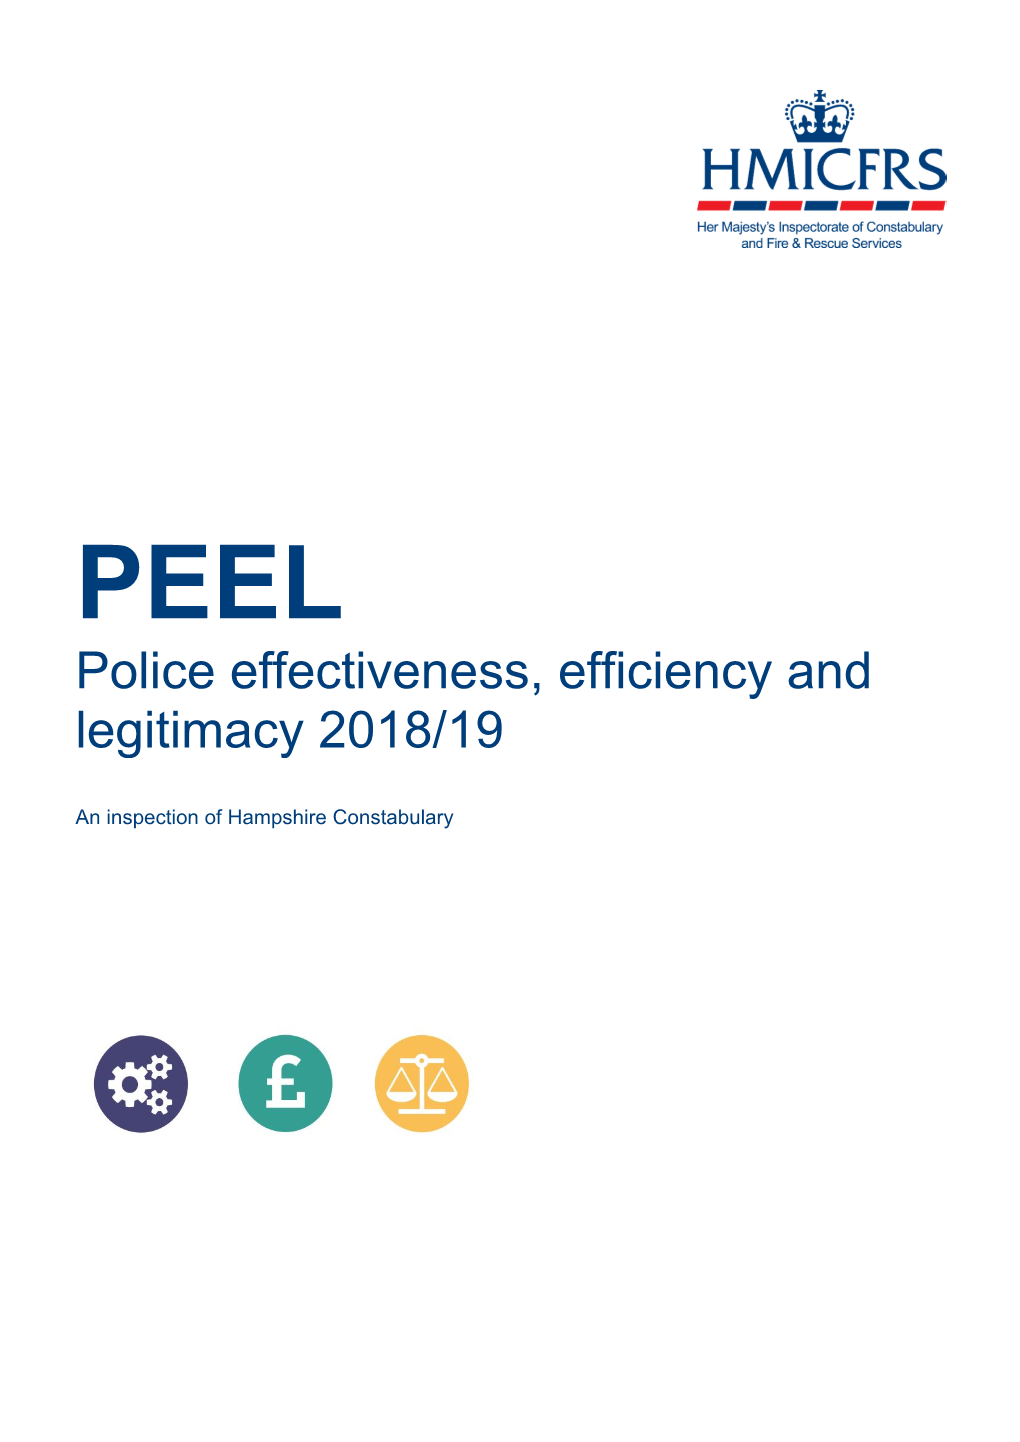 PEEL: Police Effectiveness, Efficiency and Legitimacy 2018/19